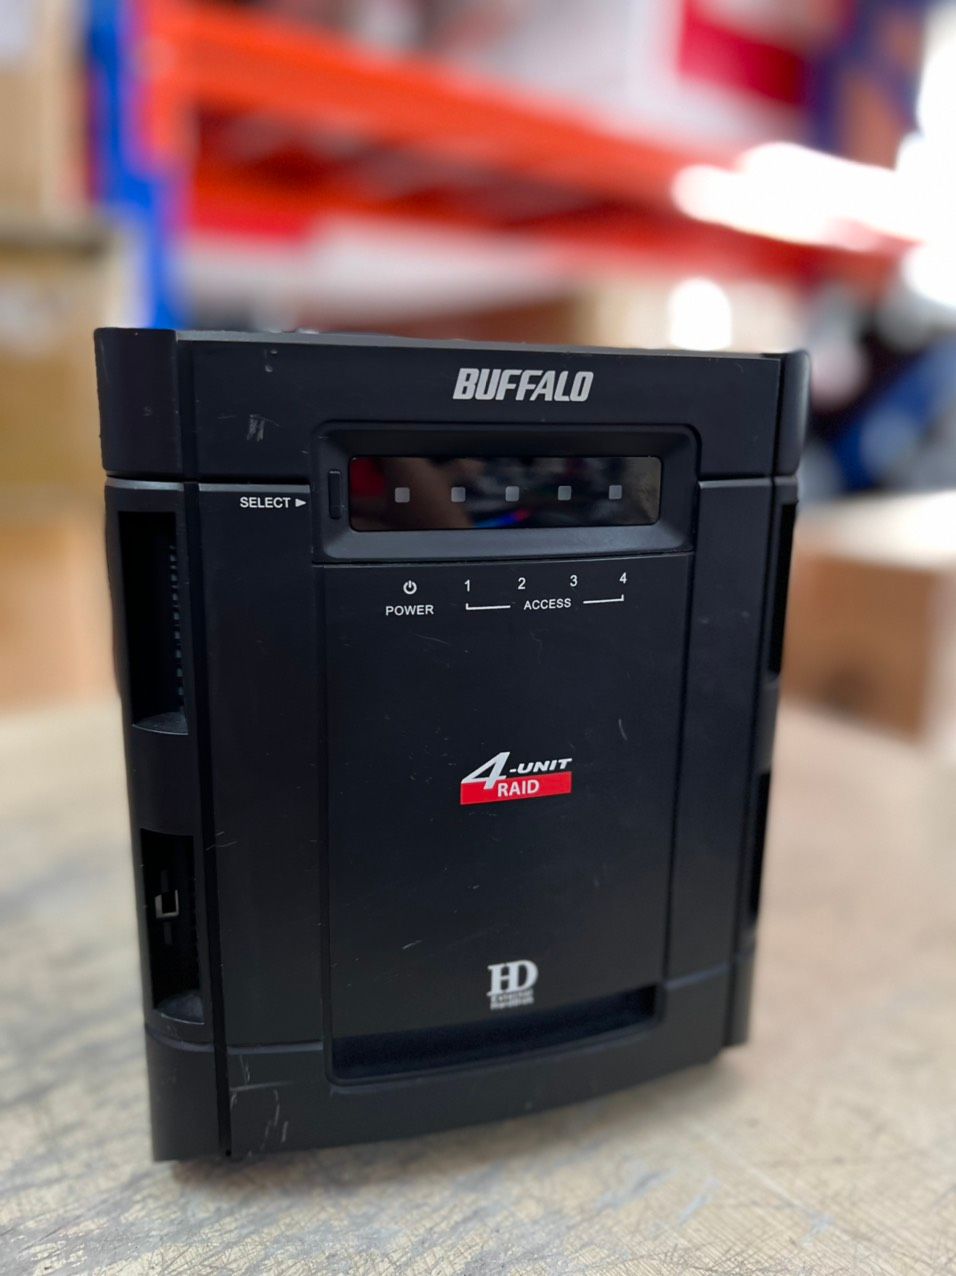 DriveStation Buffalo Quad 4-Unit Raid (Cũ) - BH 1T Star